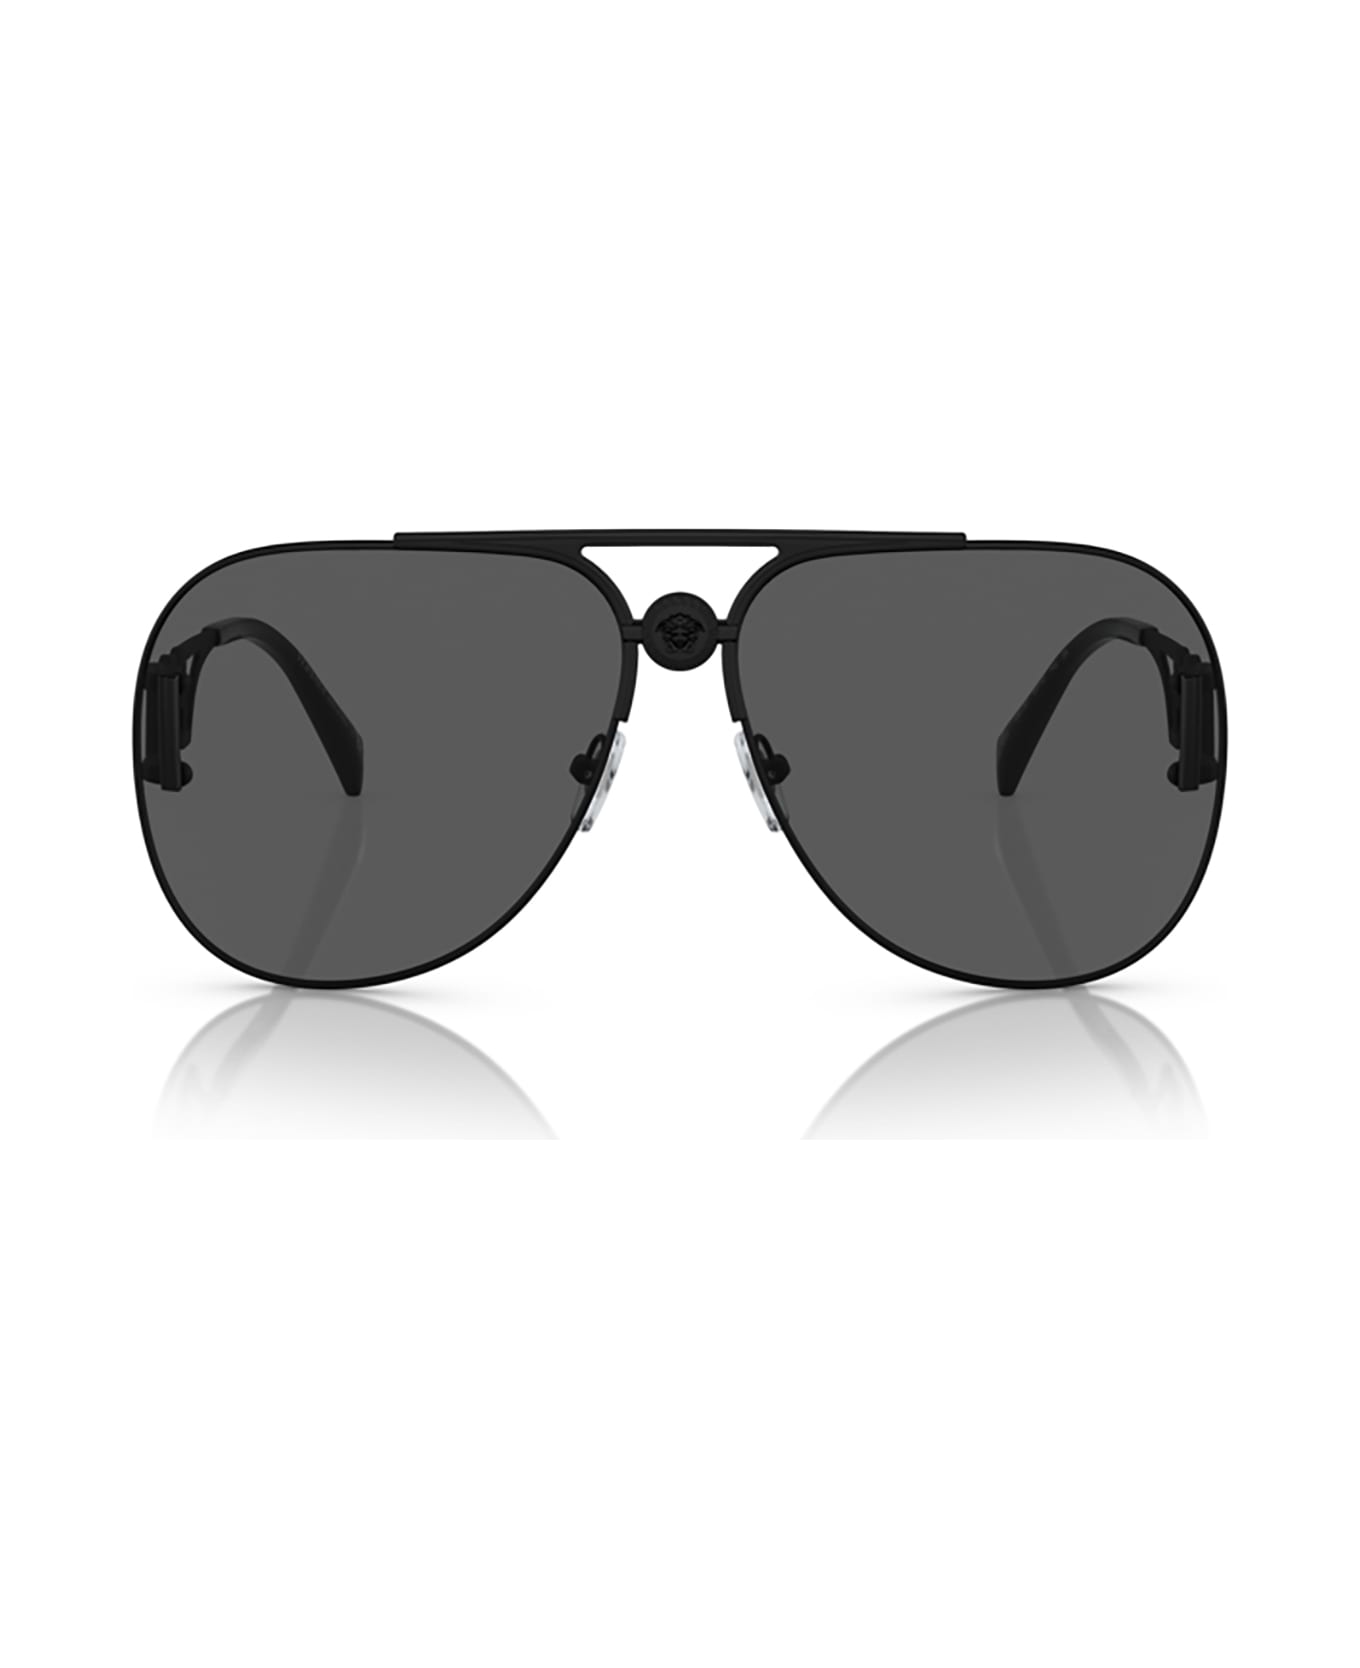 Versace Eyewear Ve2255 Matte Black Sunglasses - Matte Black